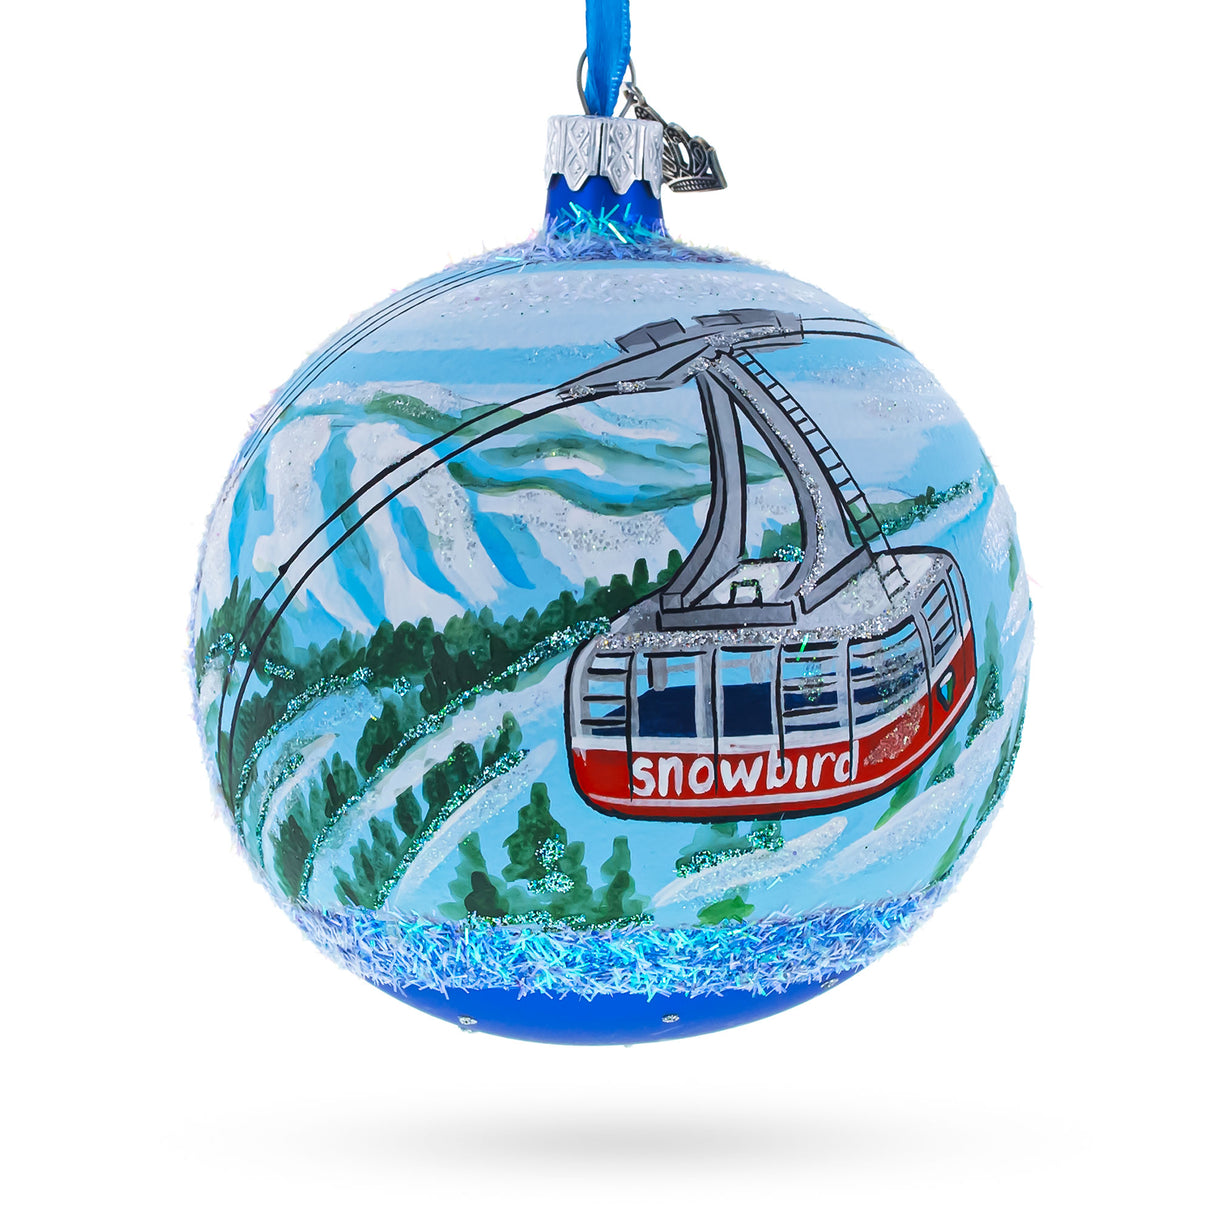 Snowbird Ski Resort, Utah, USA Glass Ball Christmas Ornament in Multi color, Round shape